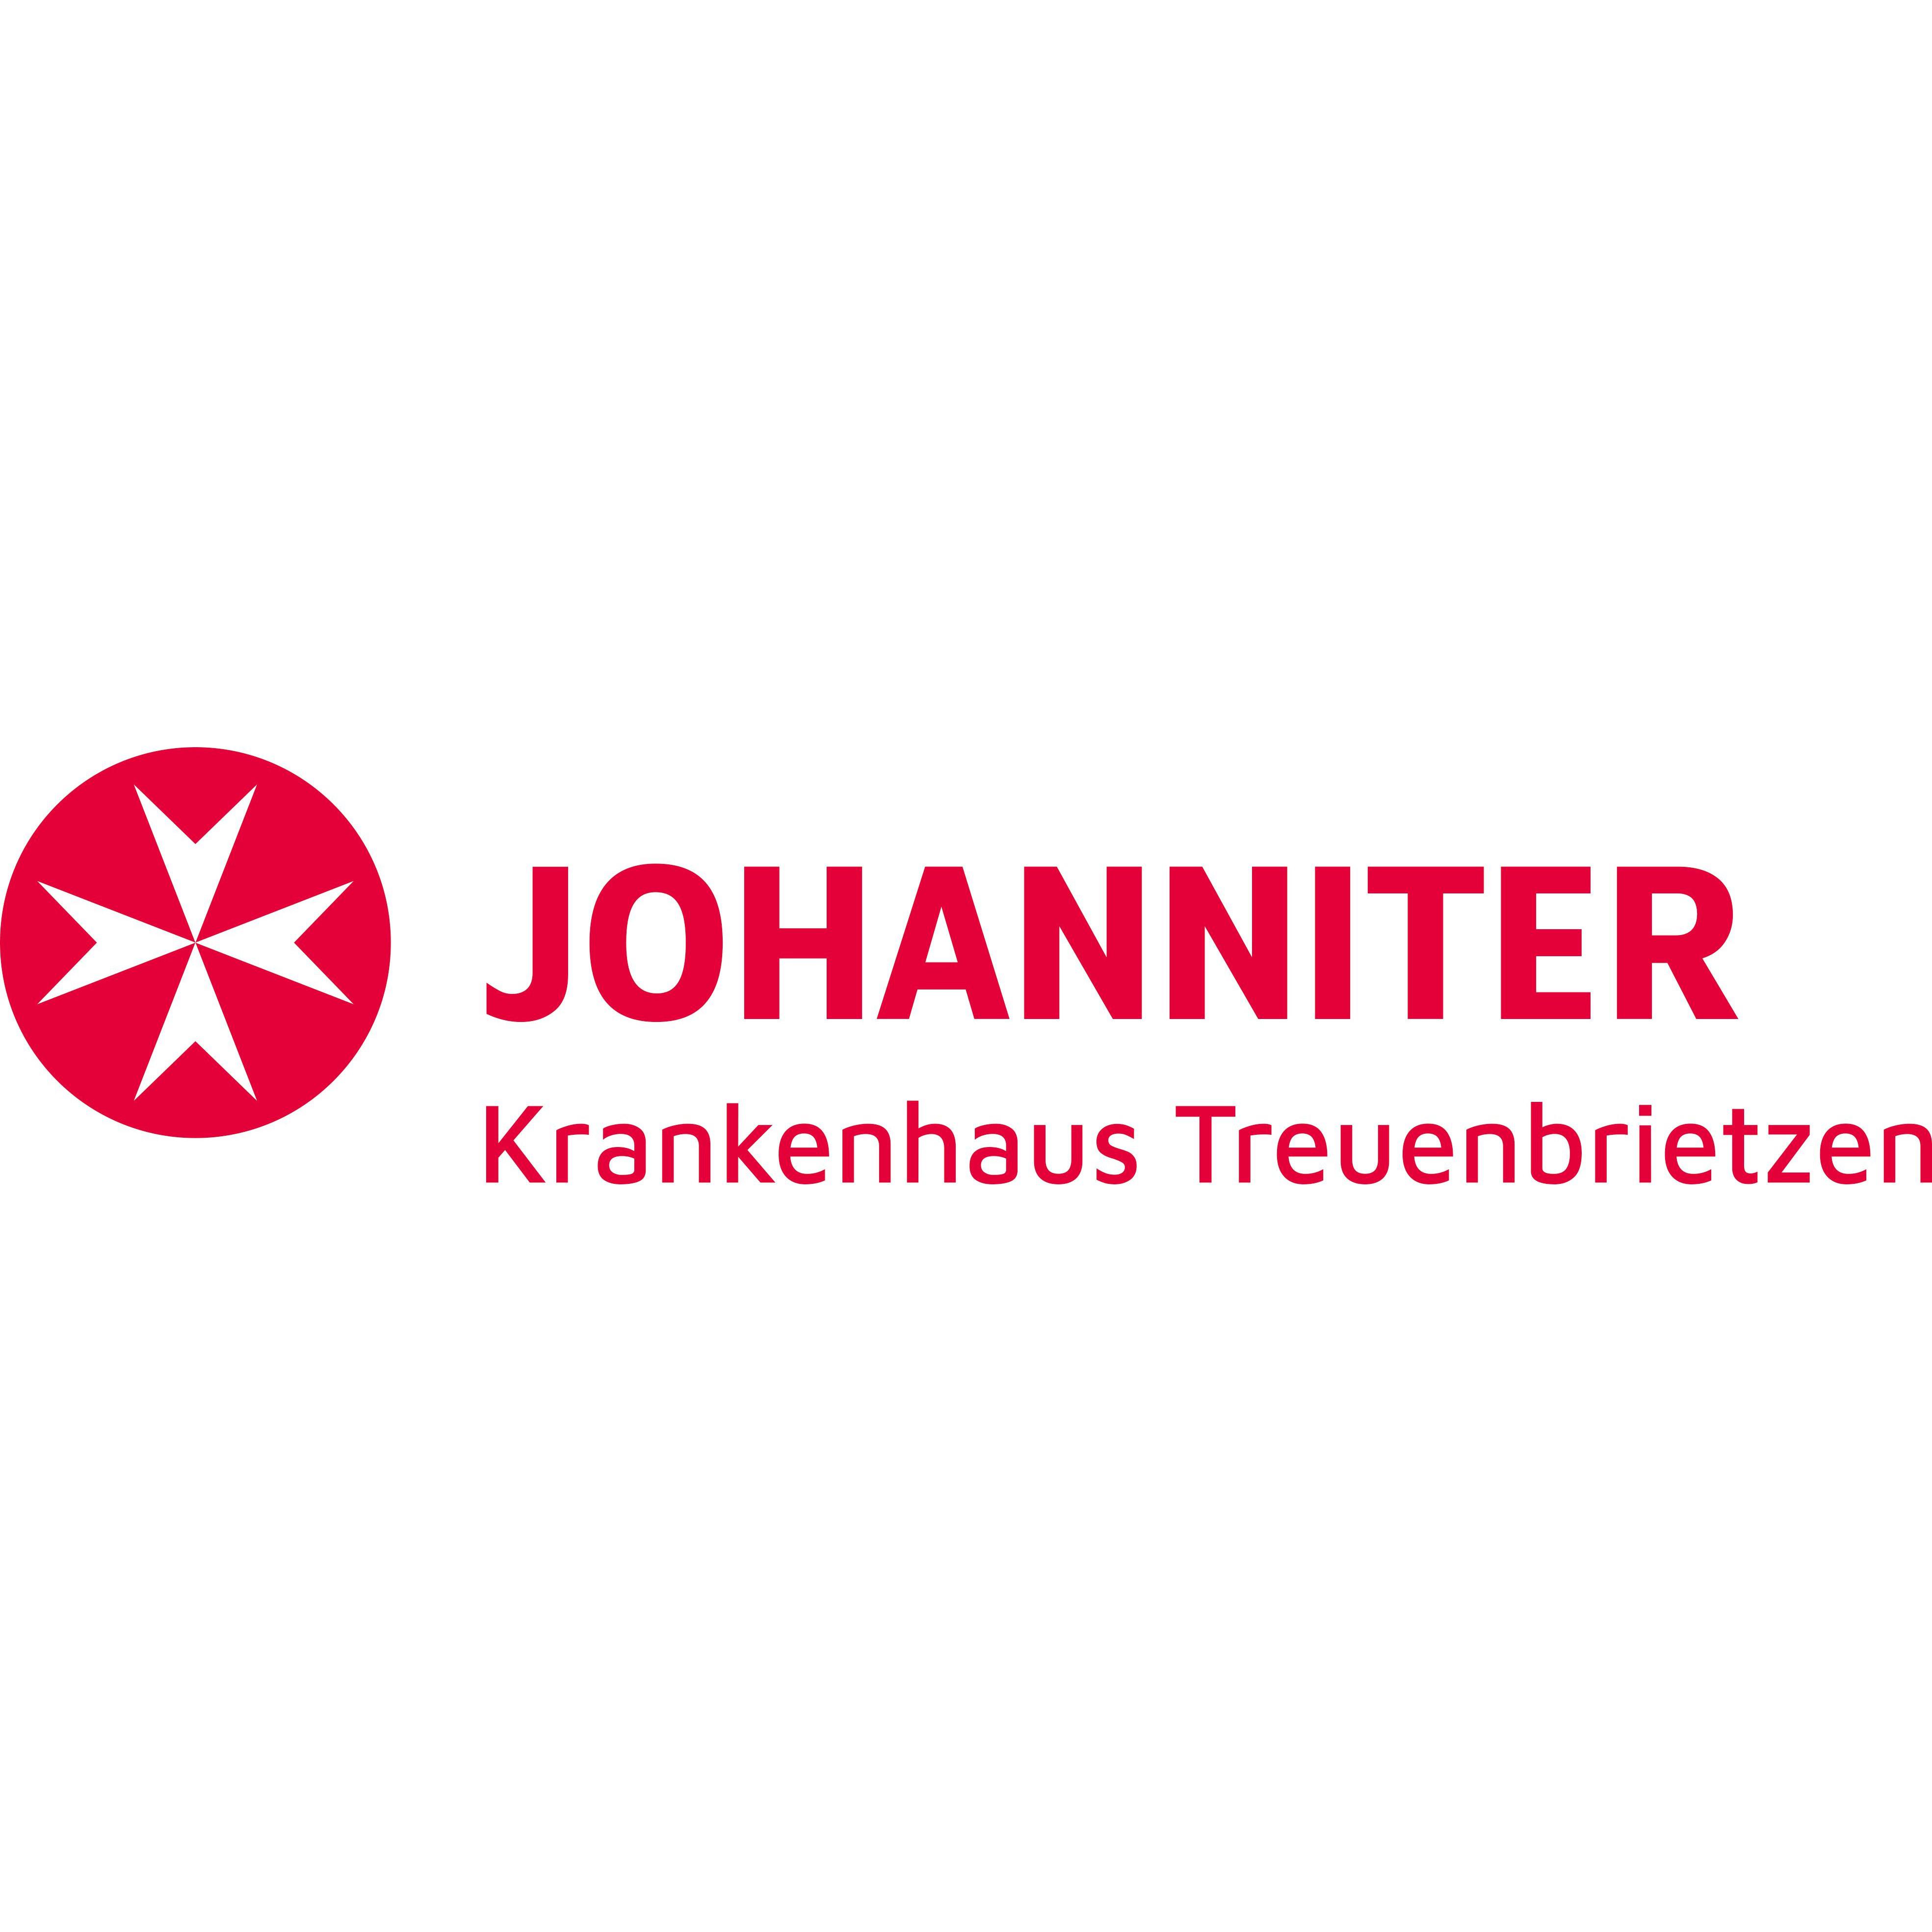 Johanniter-Krankenhaus Treuenbrietzen Logo